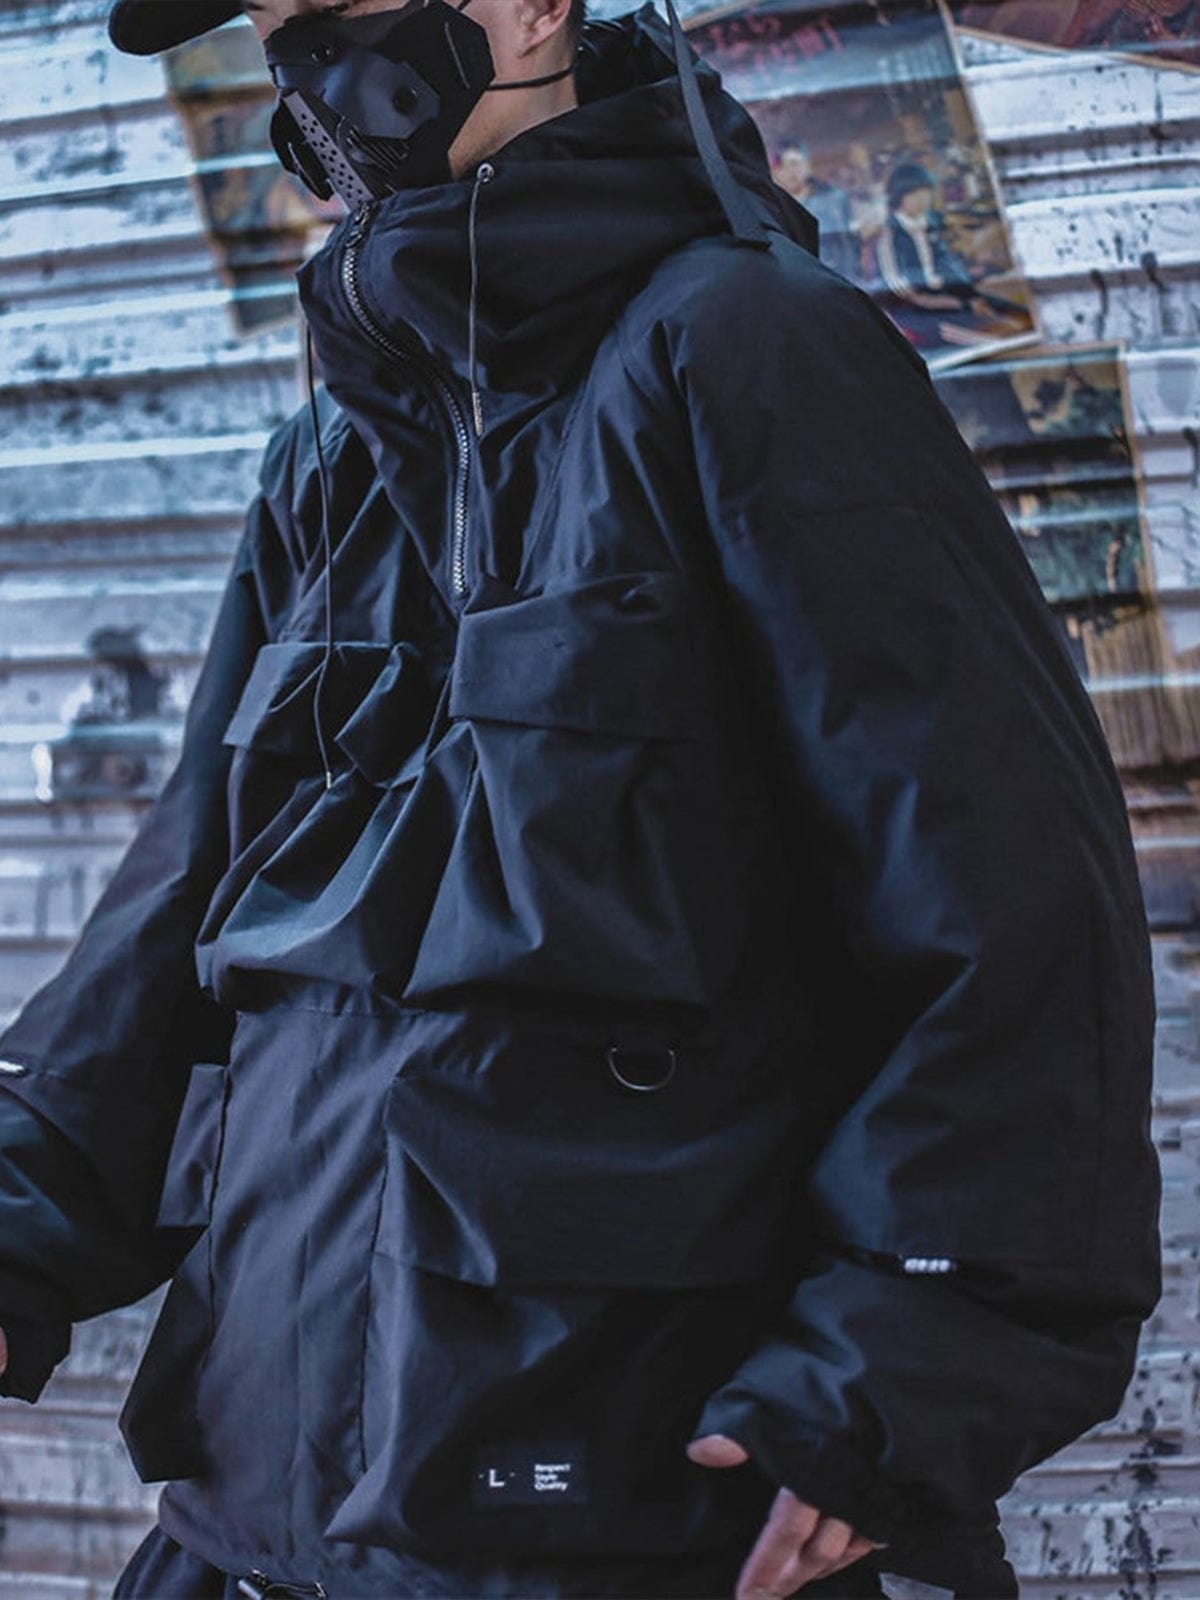 Combat Multi Pockets Winter Coat Streetwear Brand Techwear Combat Tactical YUGEN THEORY